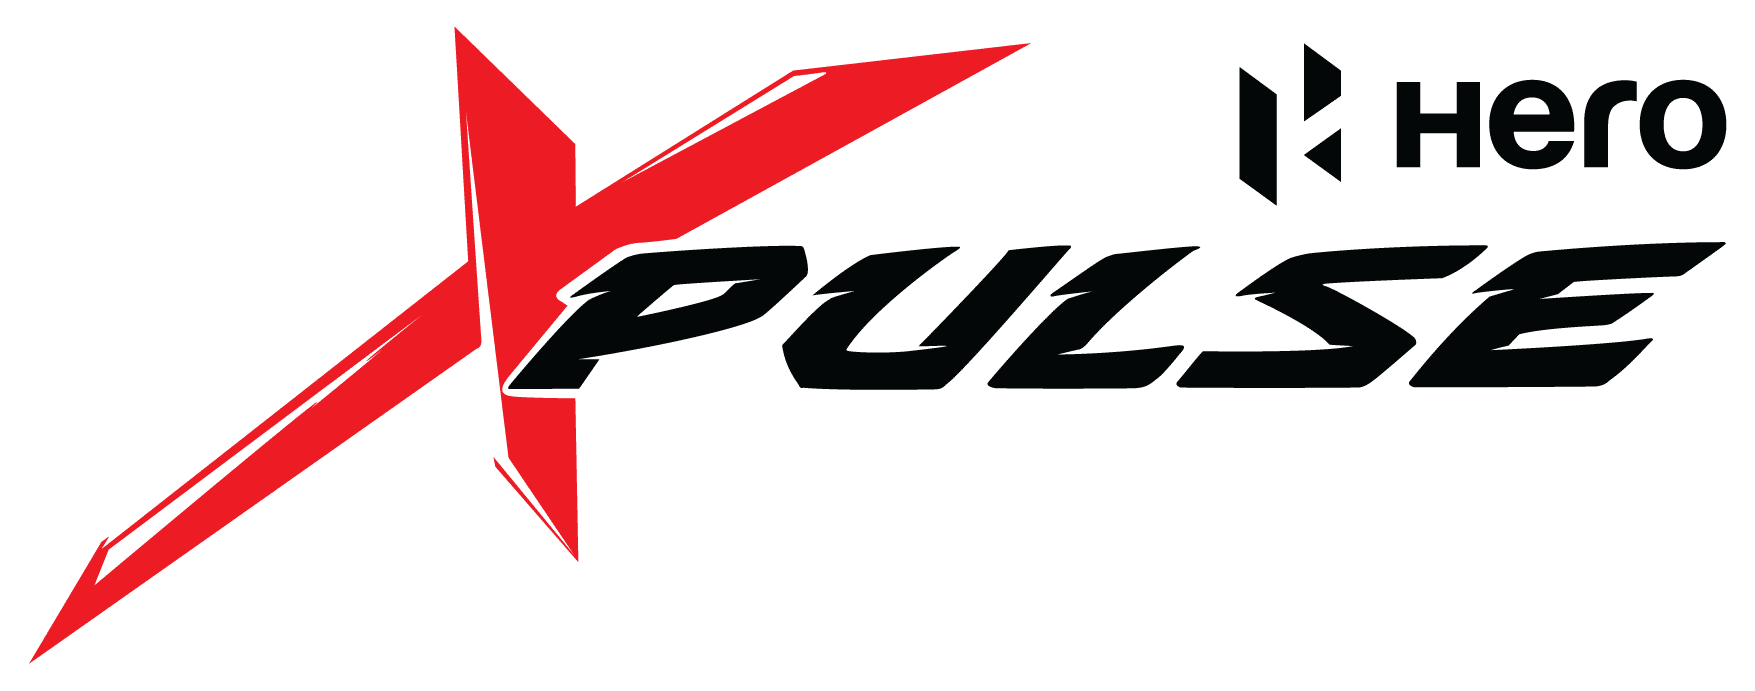 Hero Xpulse Logo